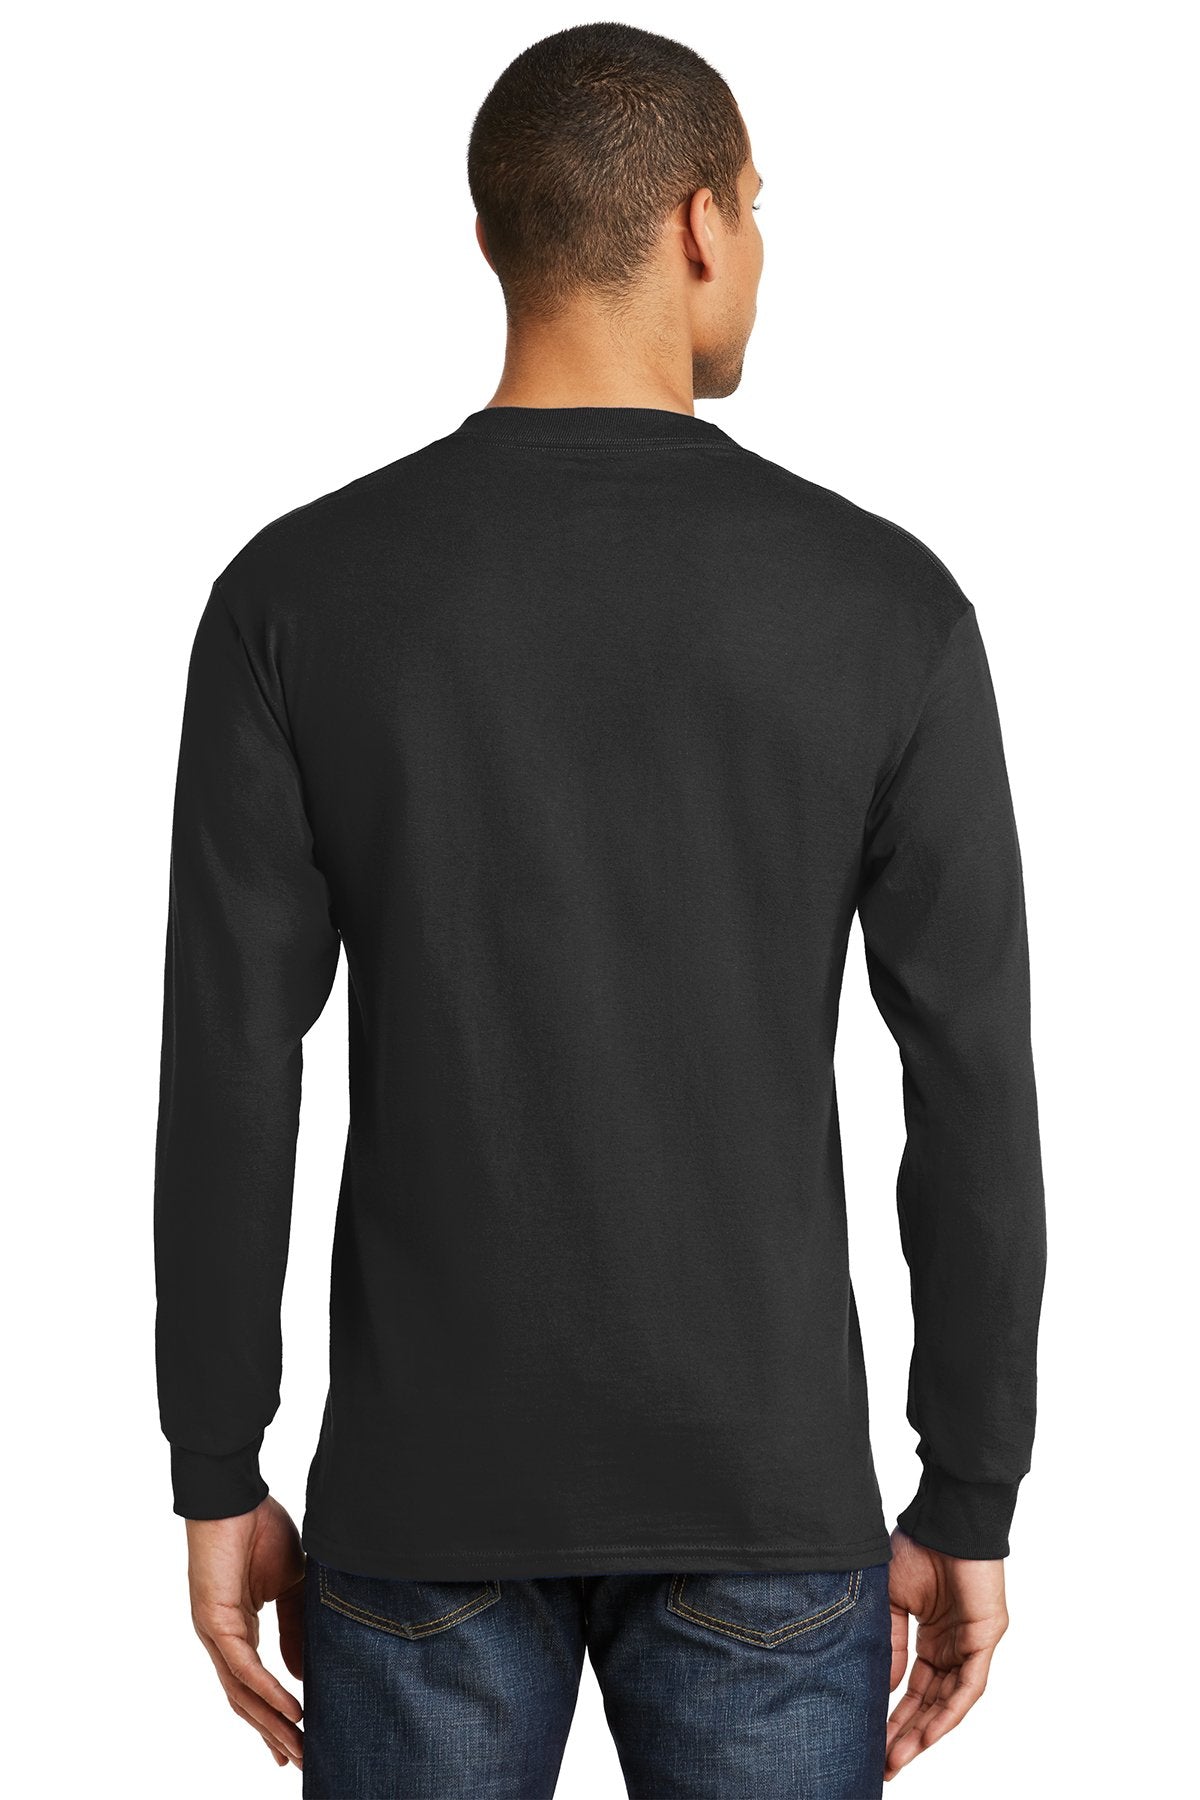 hanes beefy t cotton long sleeve t shirt 5186 black